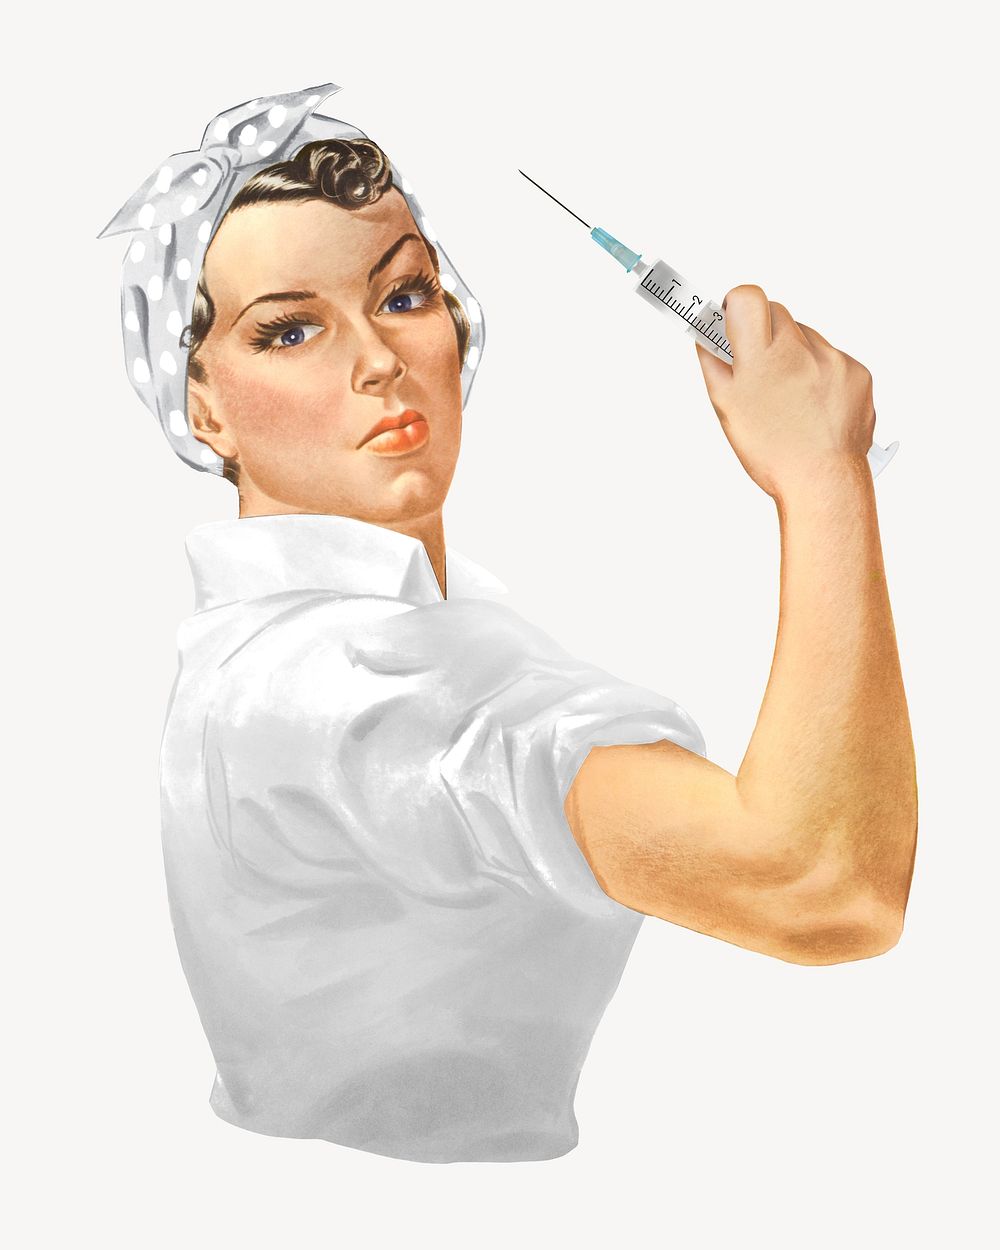 Nurse holding needle illustration. Remixed by rawpixel.